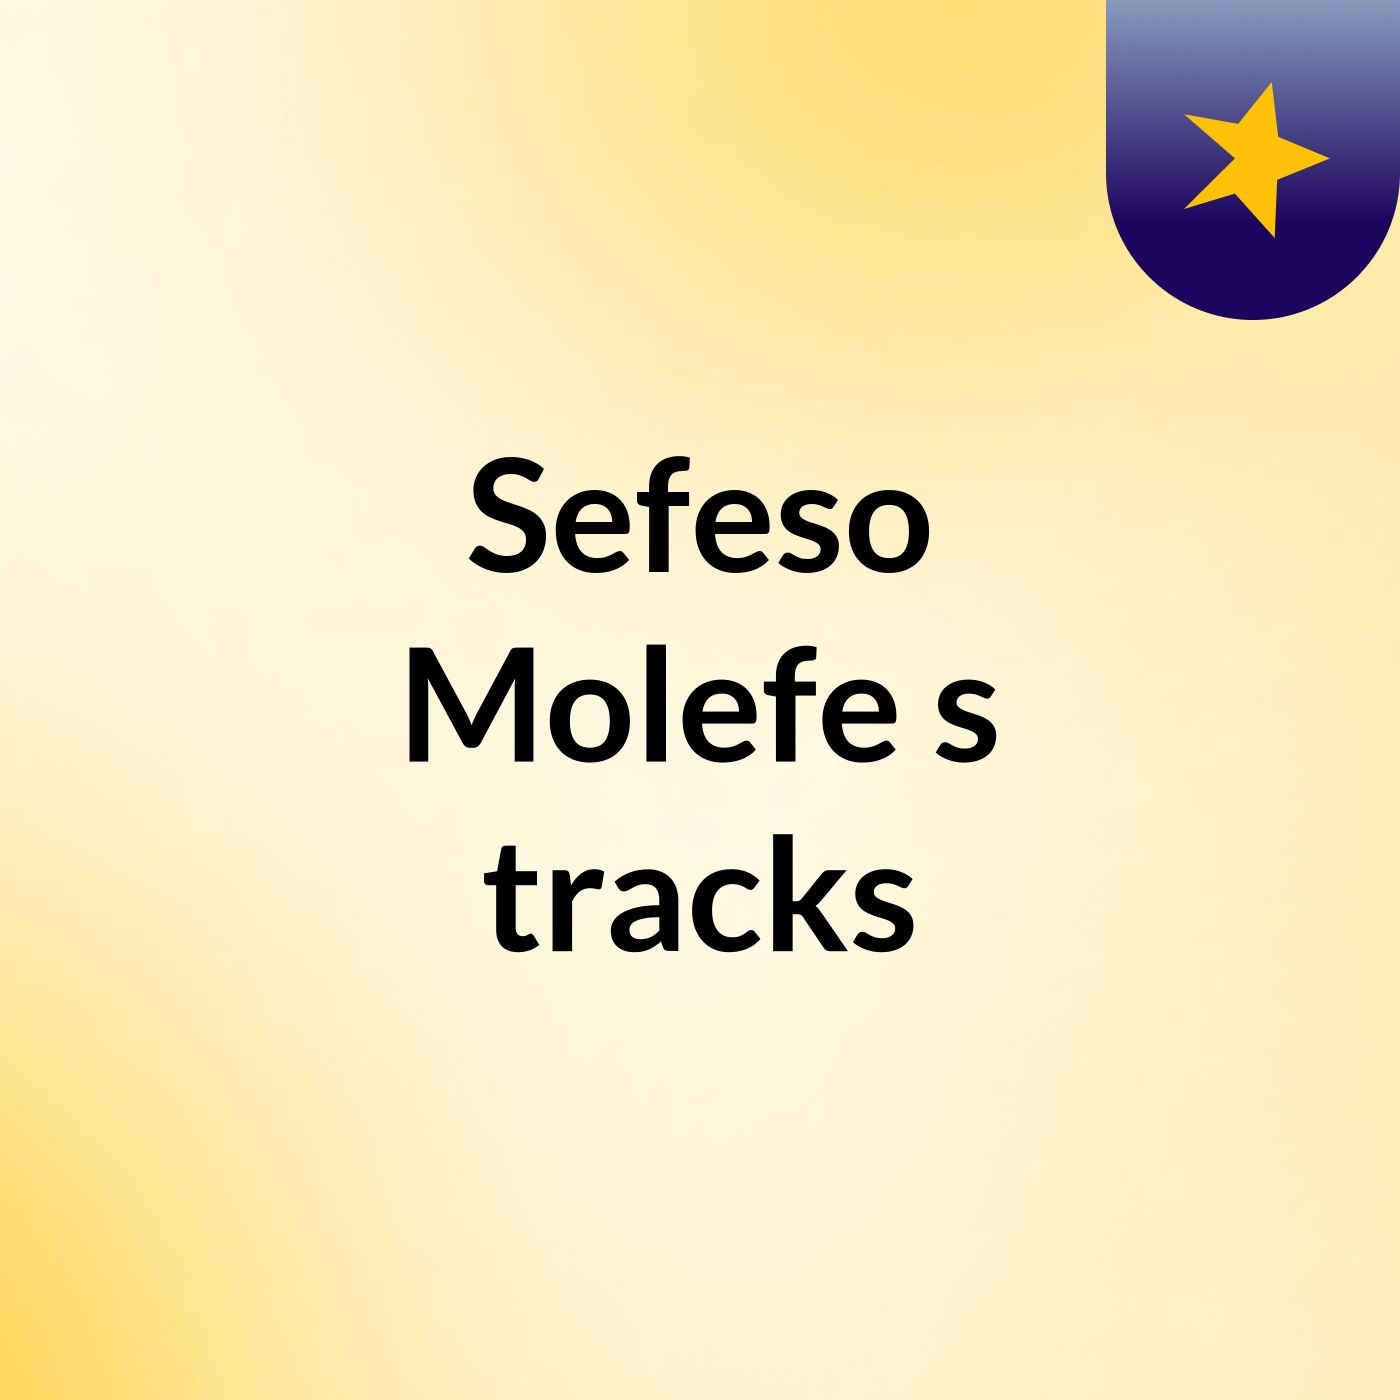 Episode 52 - Sefeso Molefe's tracks